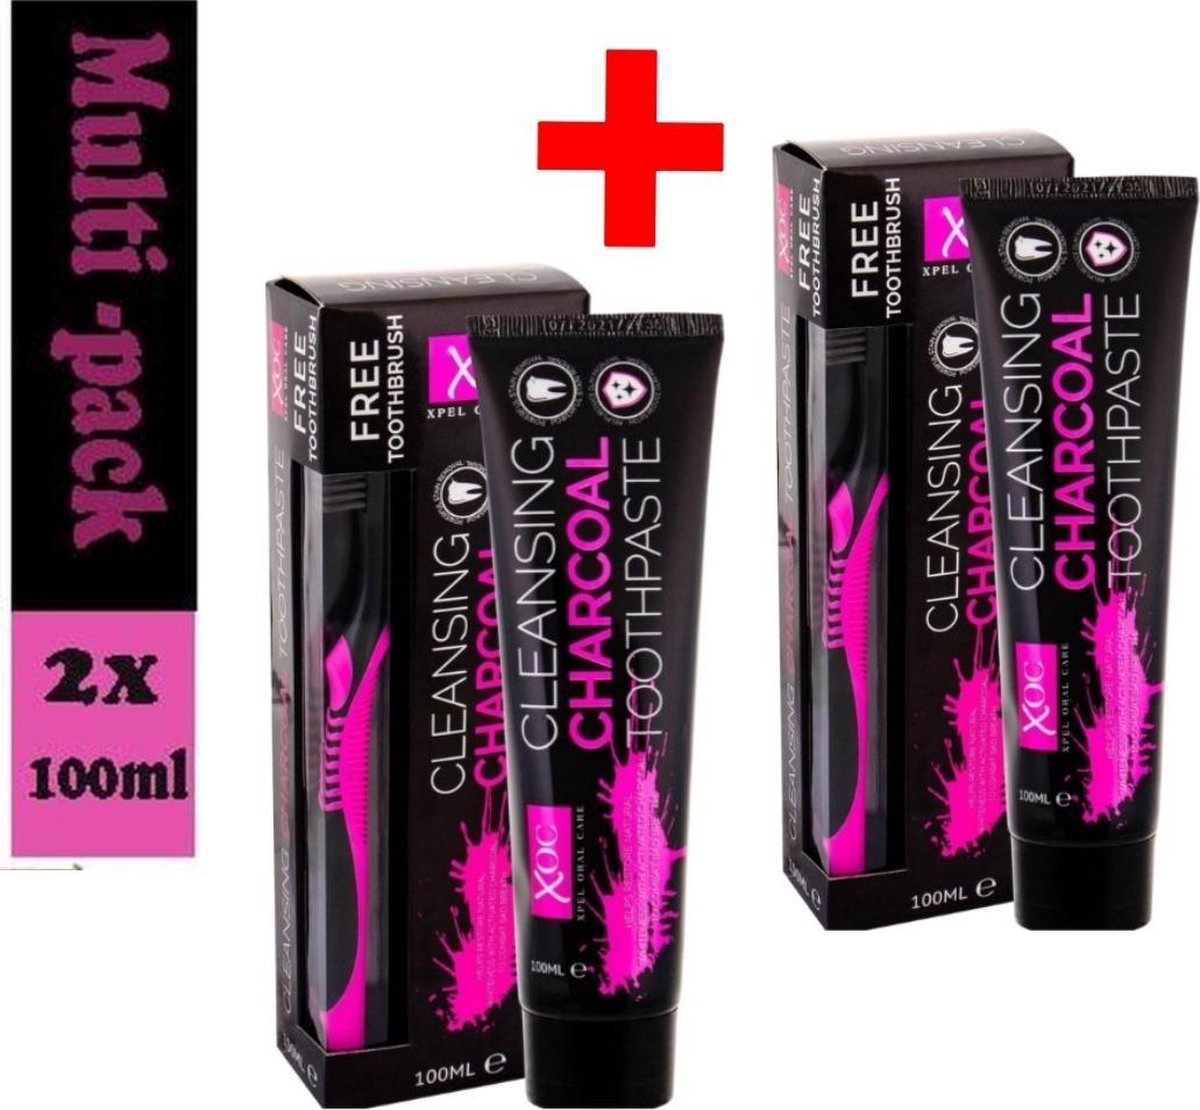 XOC Cleansing Charcoal Tandpasta -2x 100ml- duo pack | bol.com